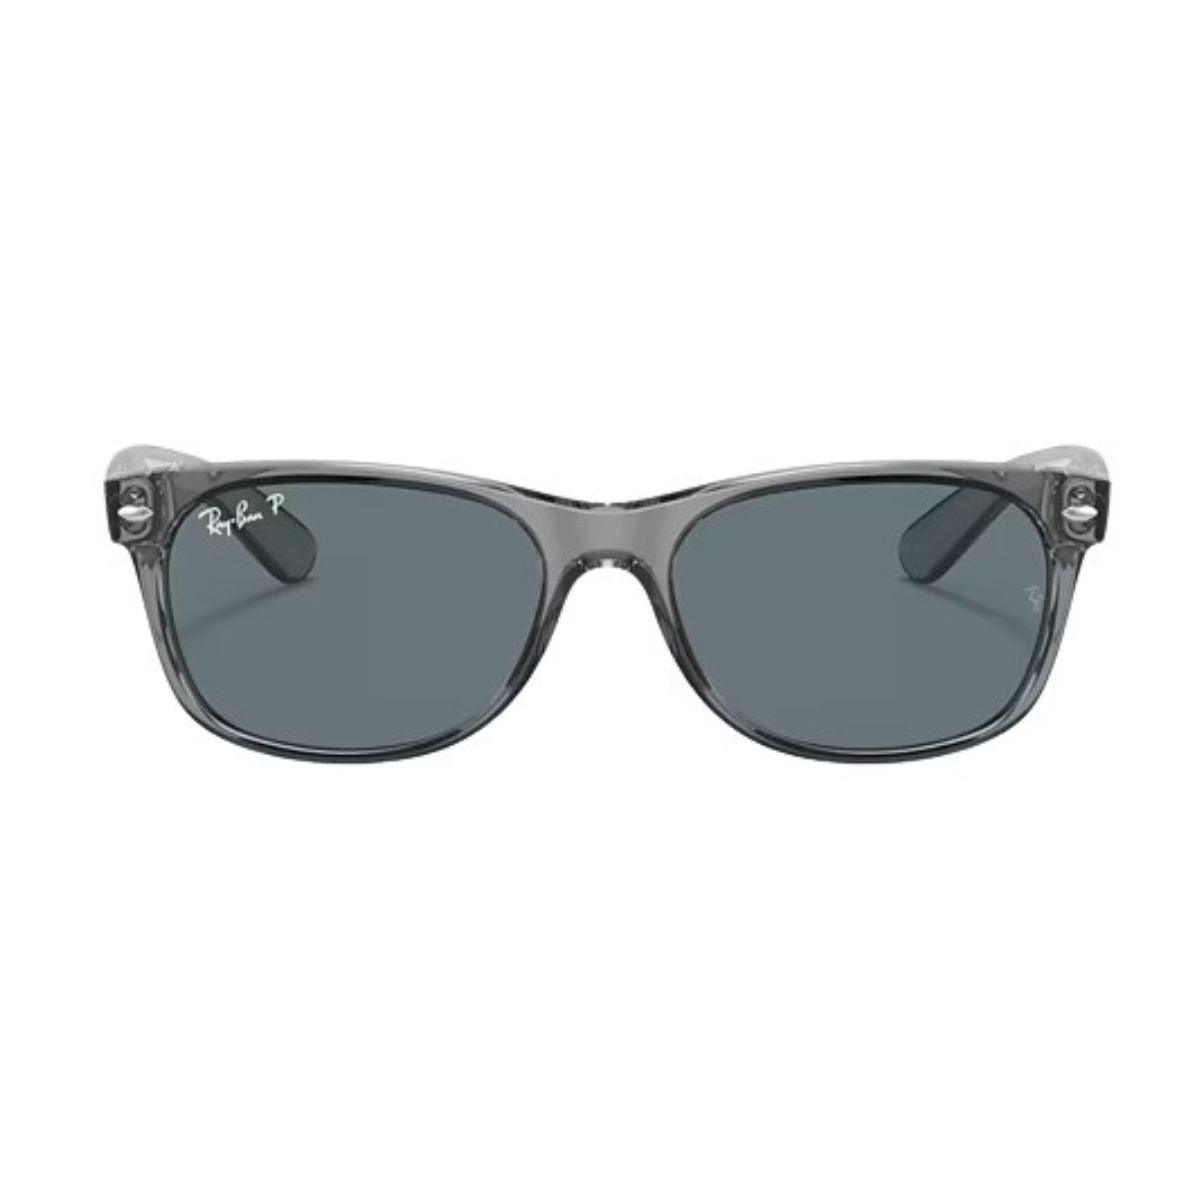 "Ray Ban 2132 6450/3R Trendy Eyewear Sunglasses For Men And Women At Optorium"